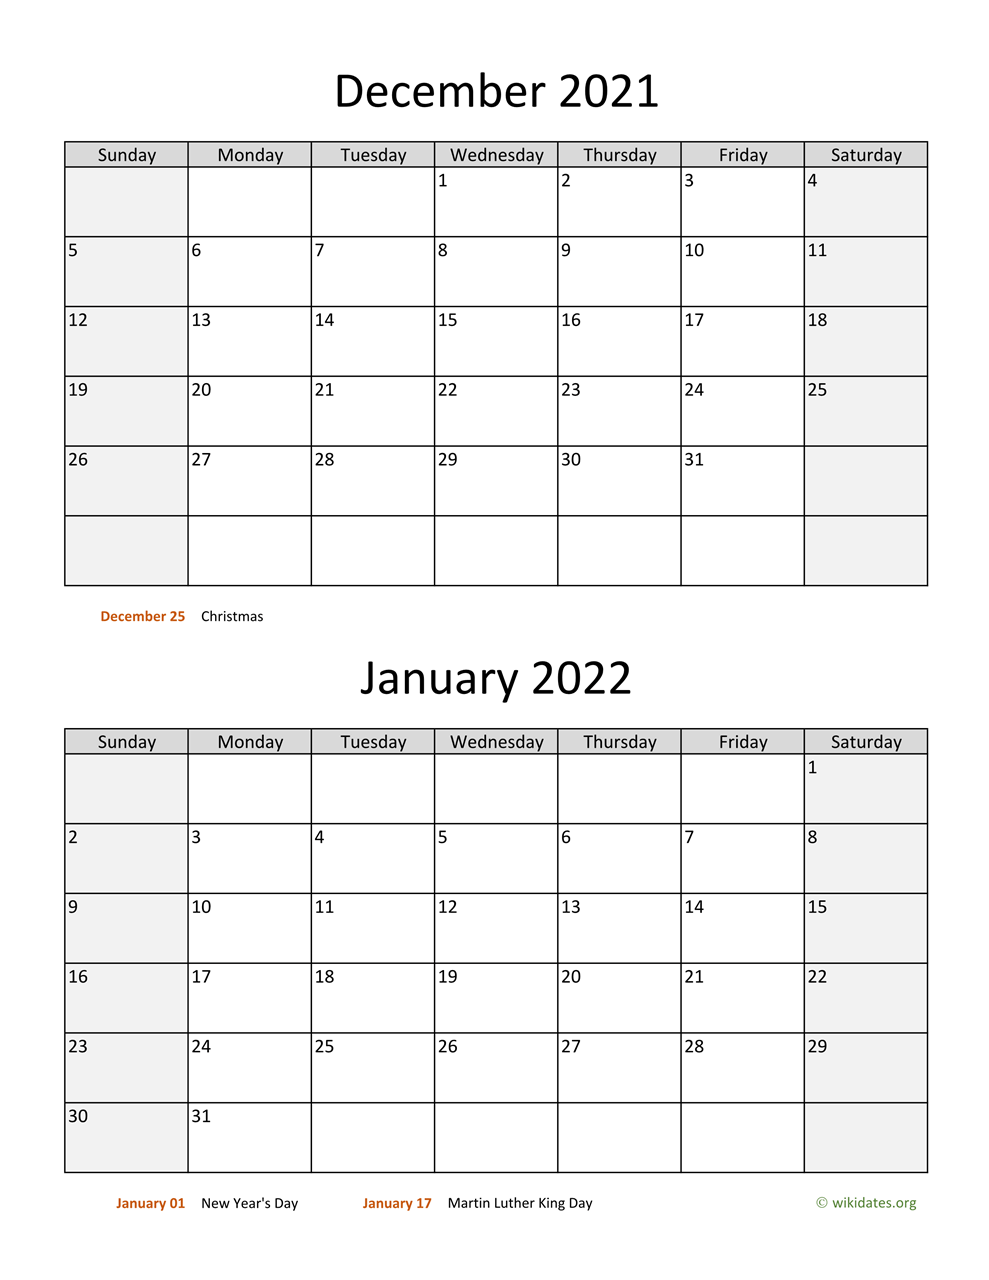 October November December Calendar 2022 December 2021 And January 2022 Calendar | Wikidates.org